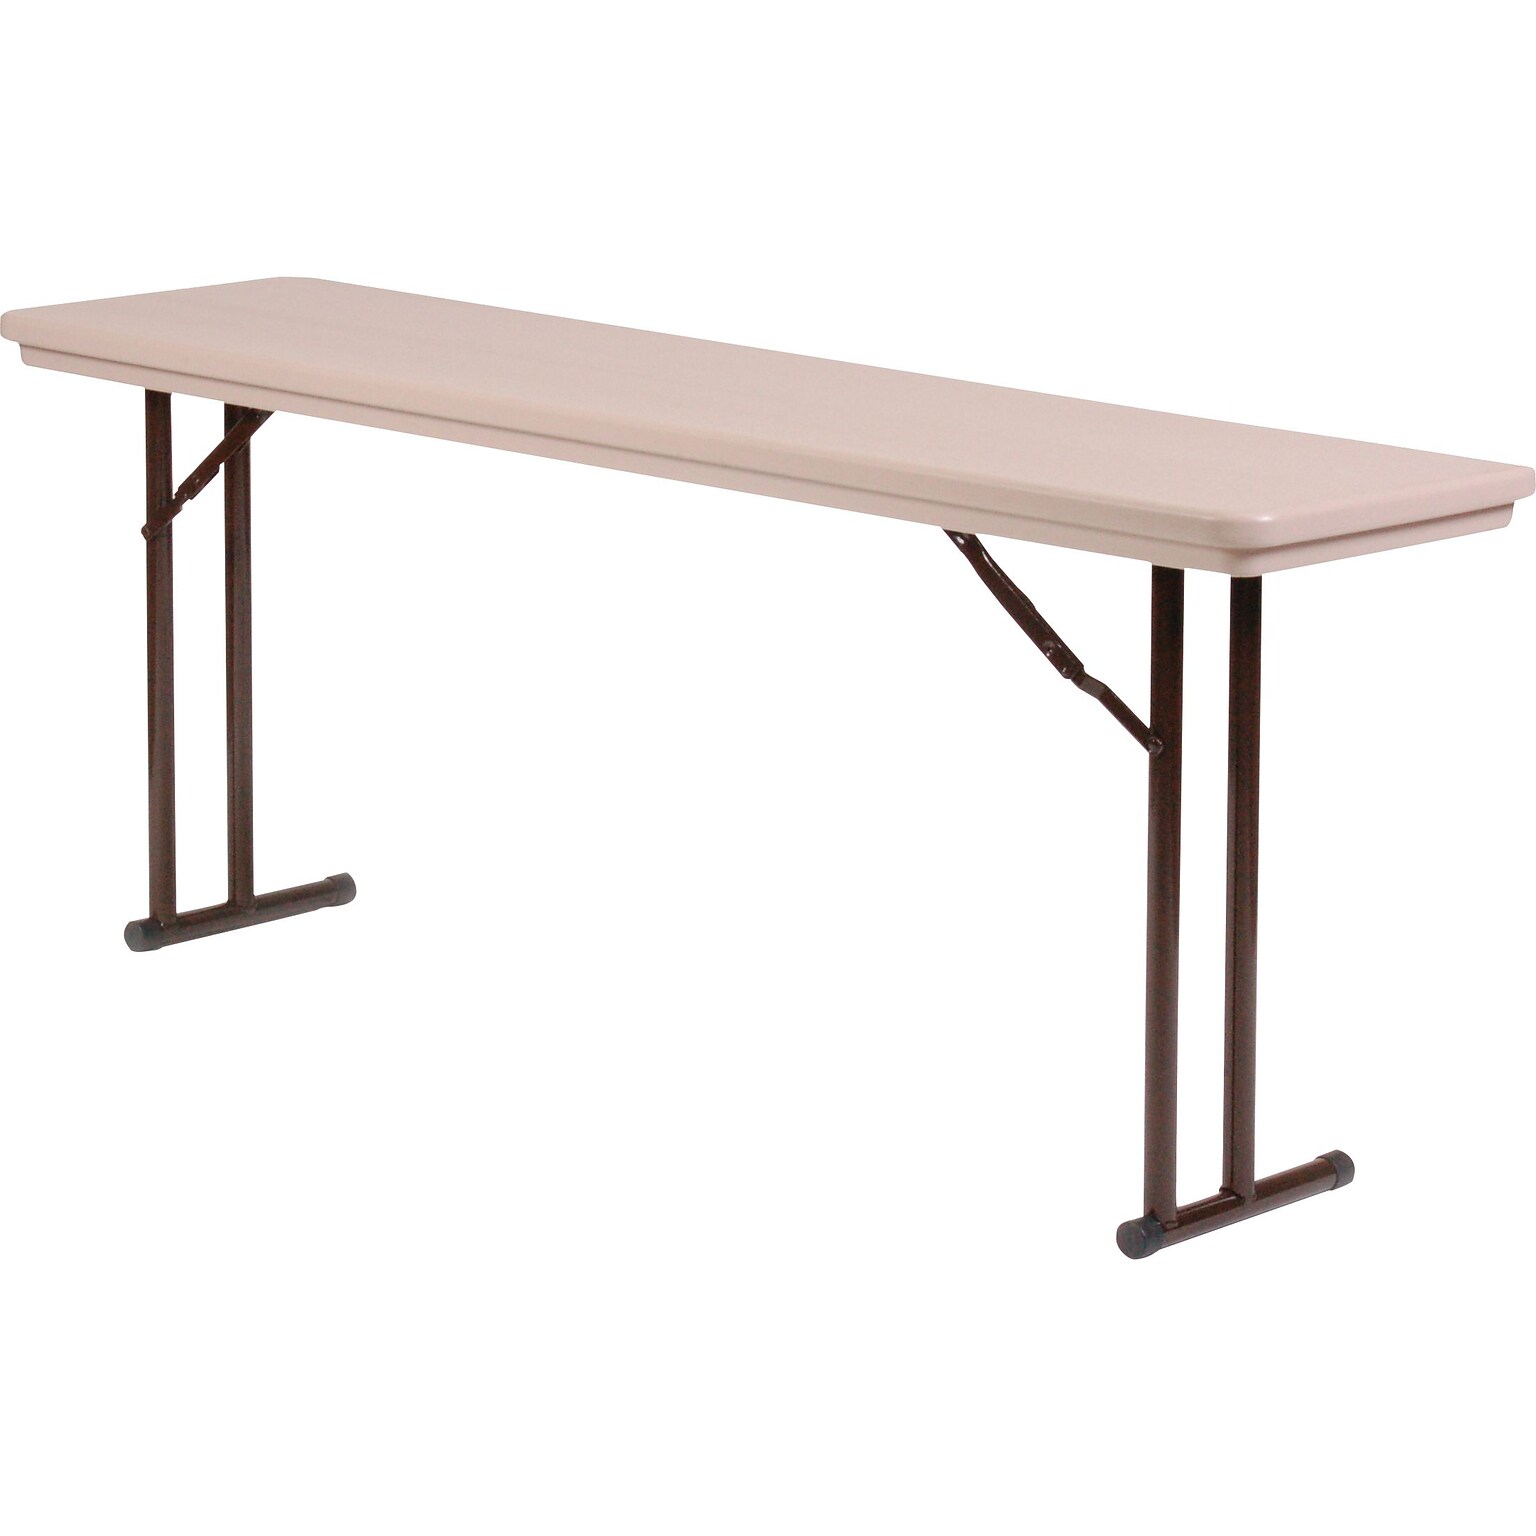 Correll® 18D x 72L Heavy Duty Plastic Folding Table; Mocha Granite Top